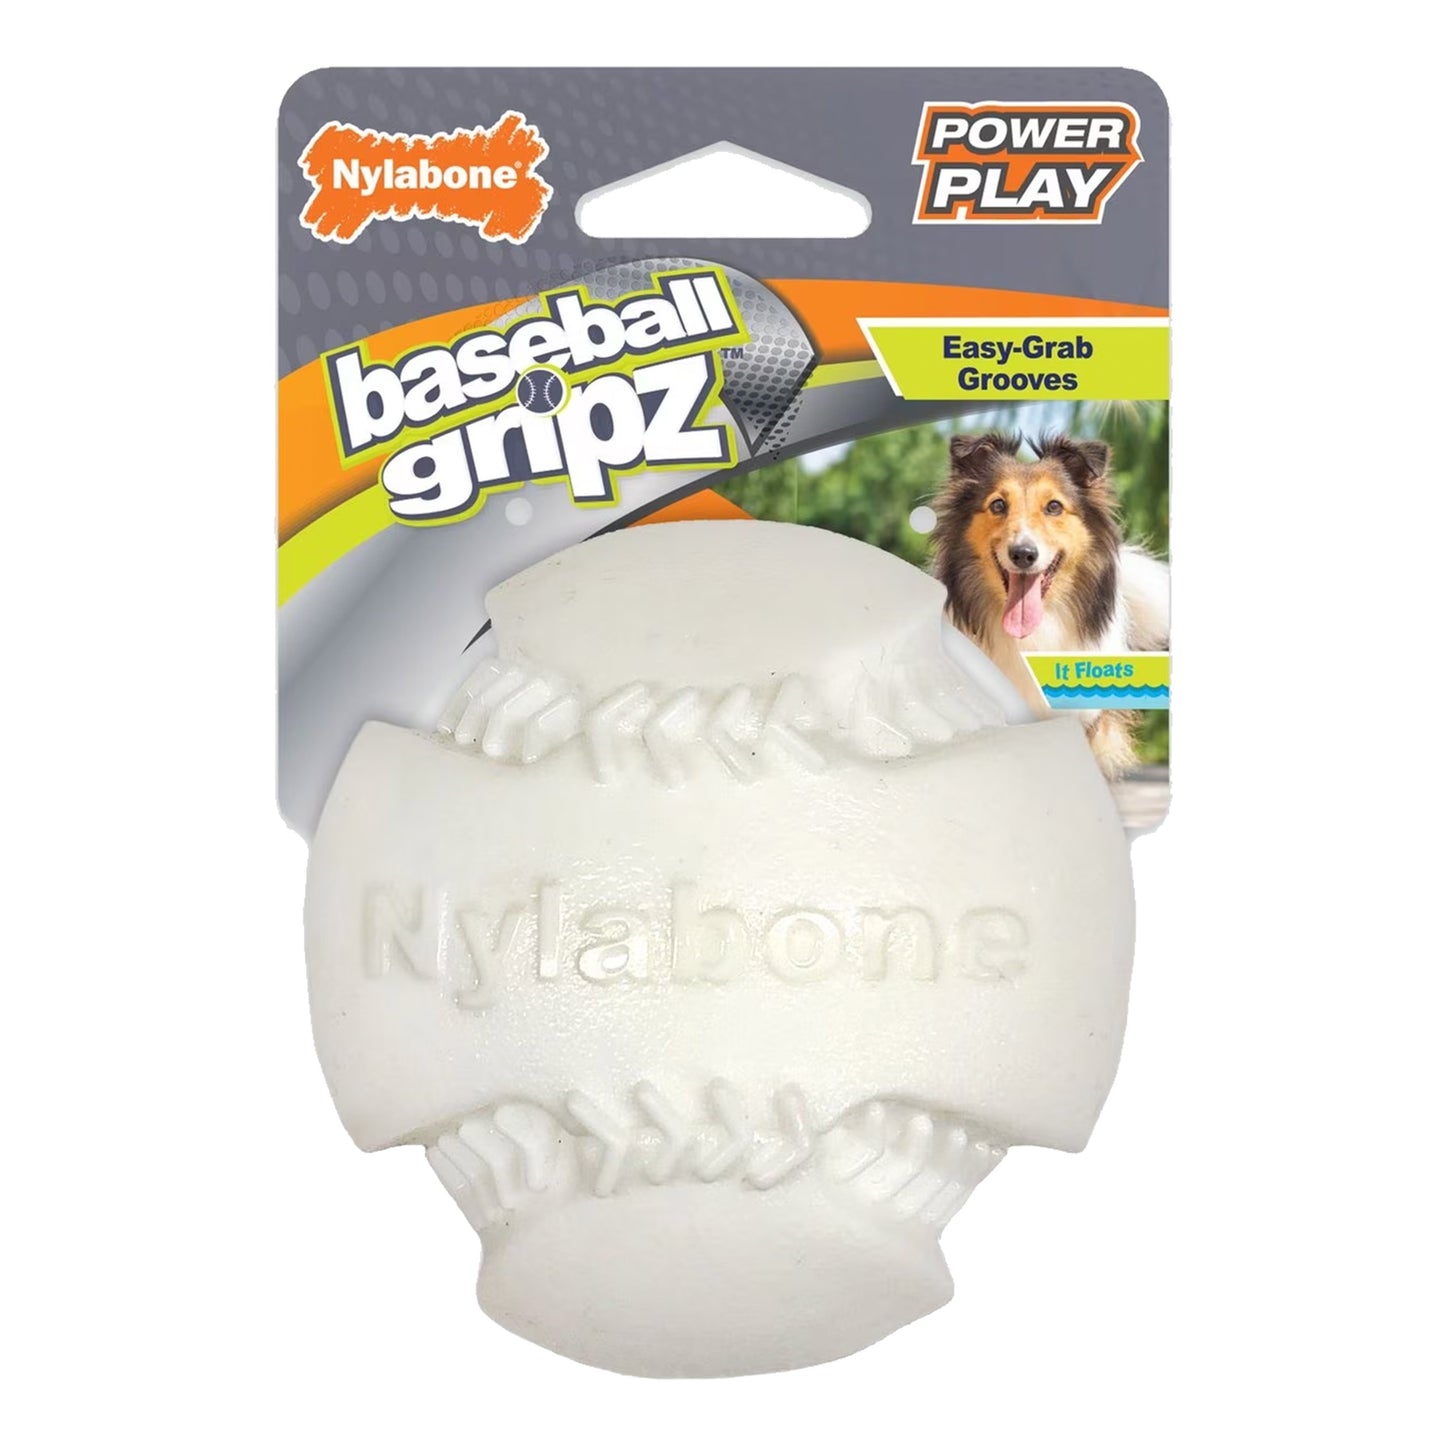 Nylabone Power Play Dog Baseball Gripz One Size (1 ct), Nylabone